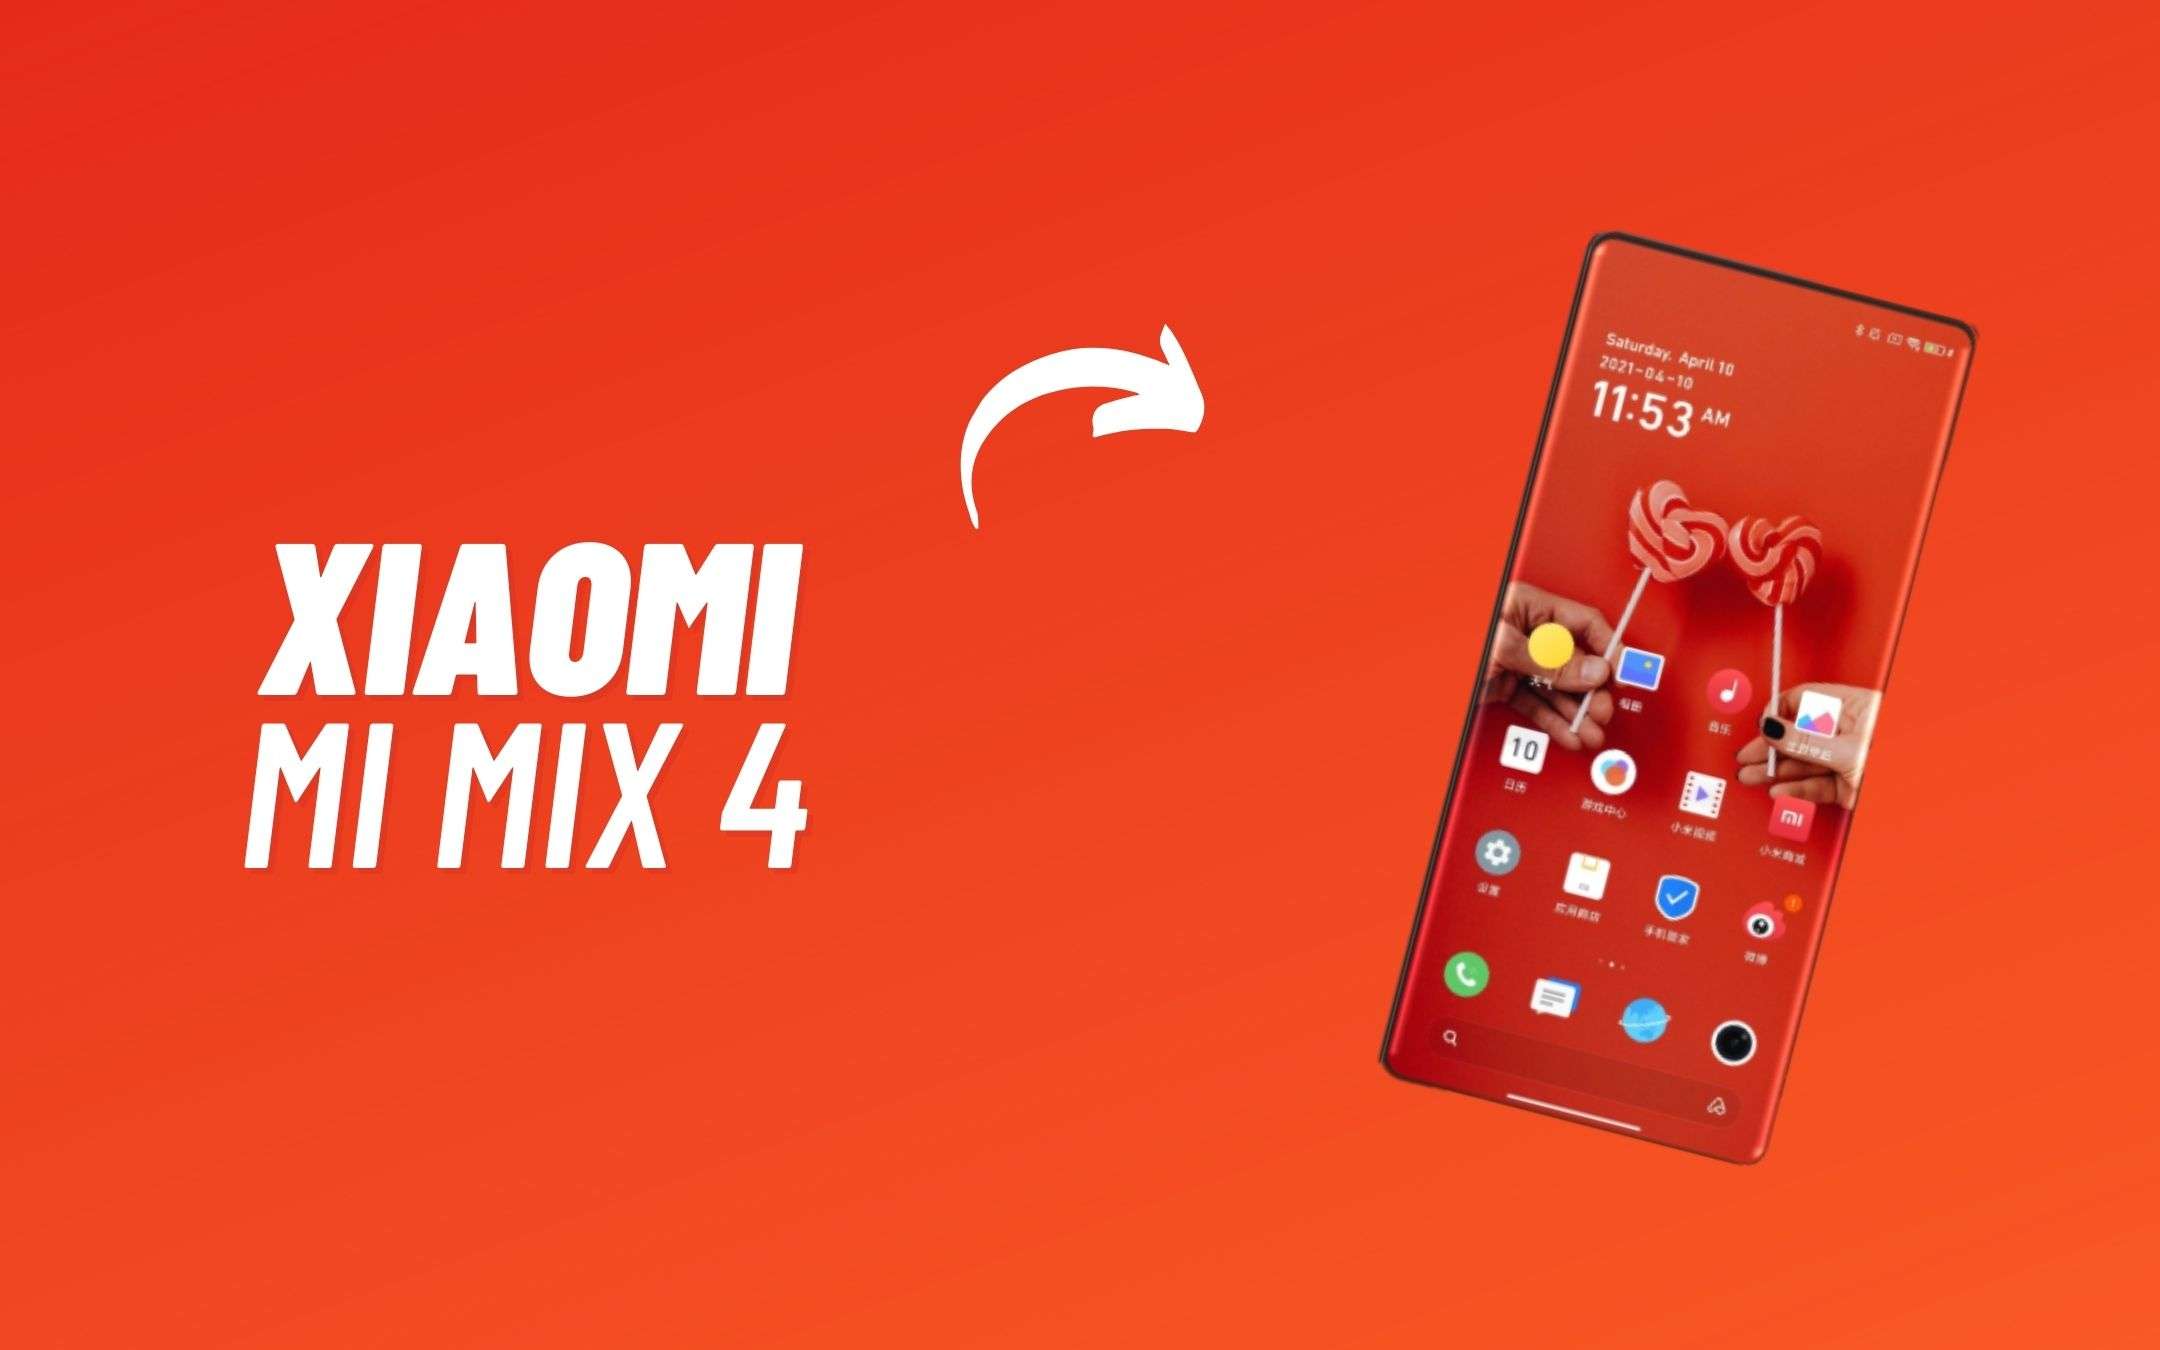 Xiaomi Mi Mix 4 avrà uno schermo curvo su tutti i lati